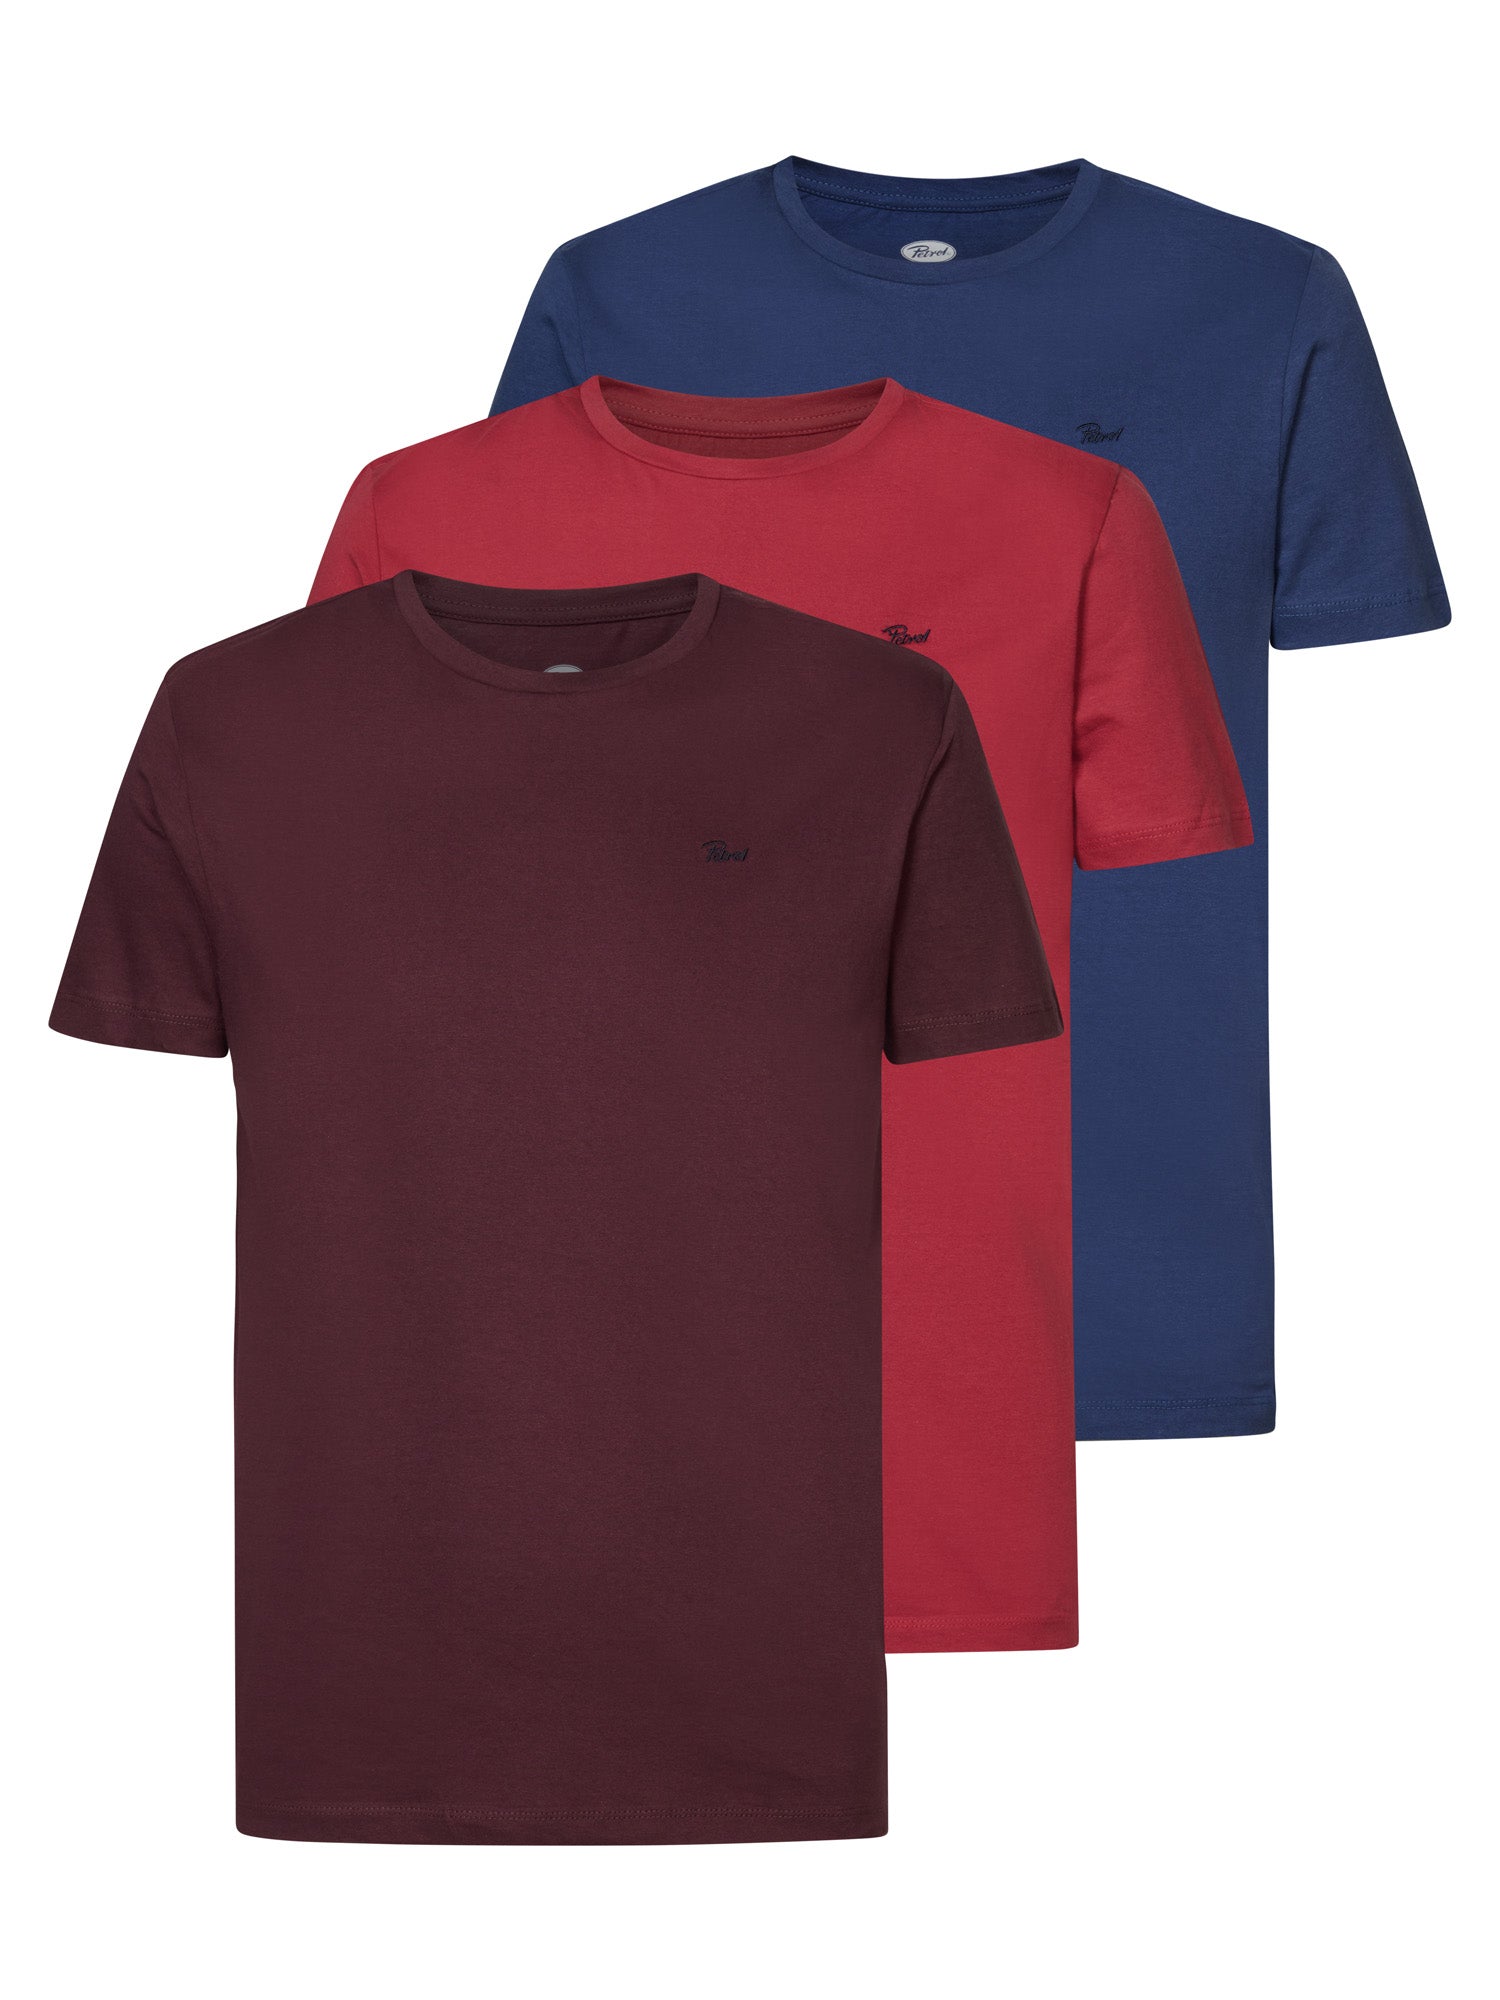 Petrol Industries 3 Pack T Shirt Burgundy/Red/Blue - XS